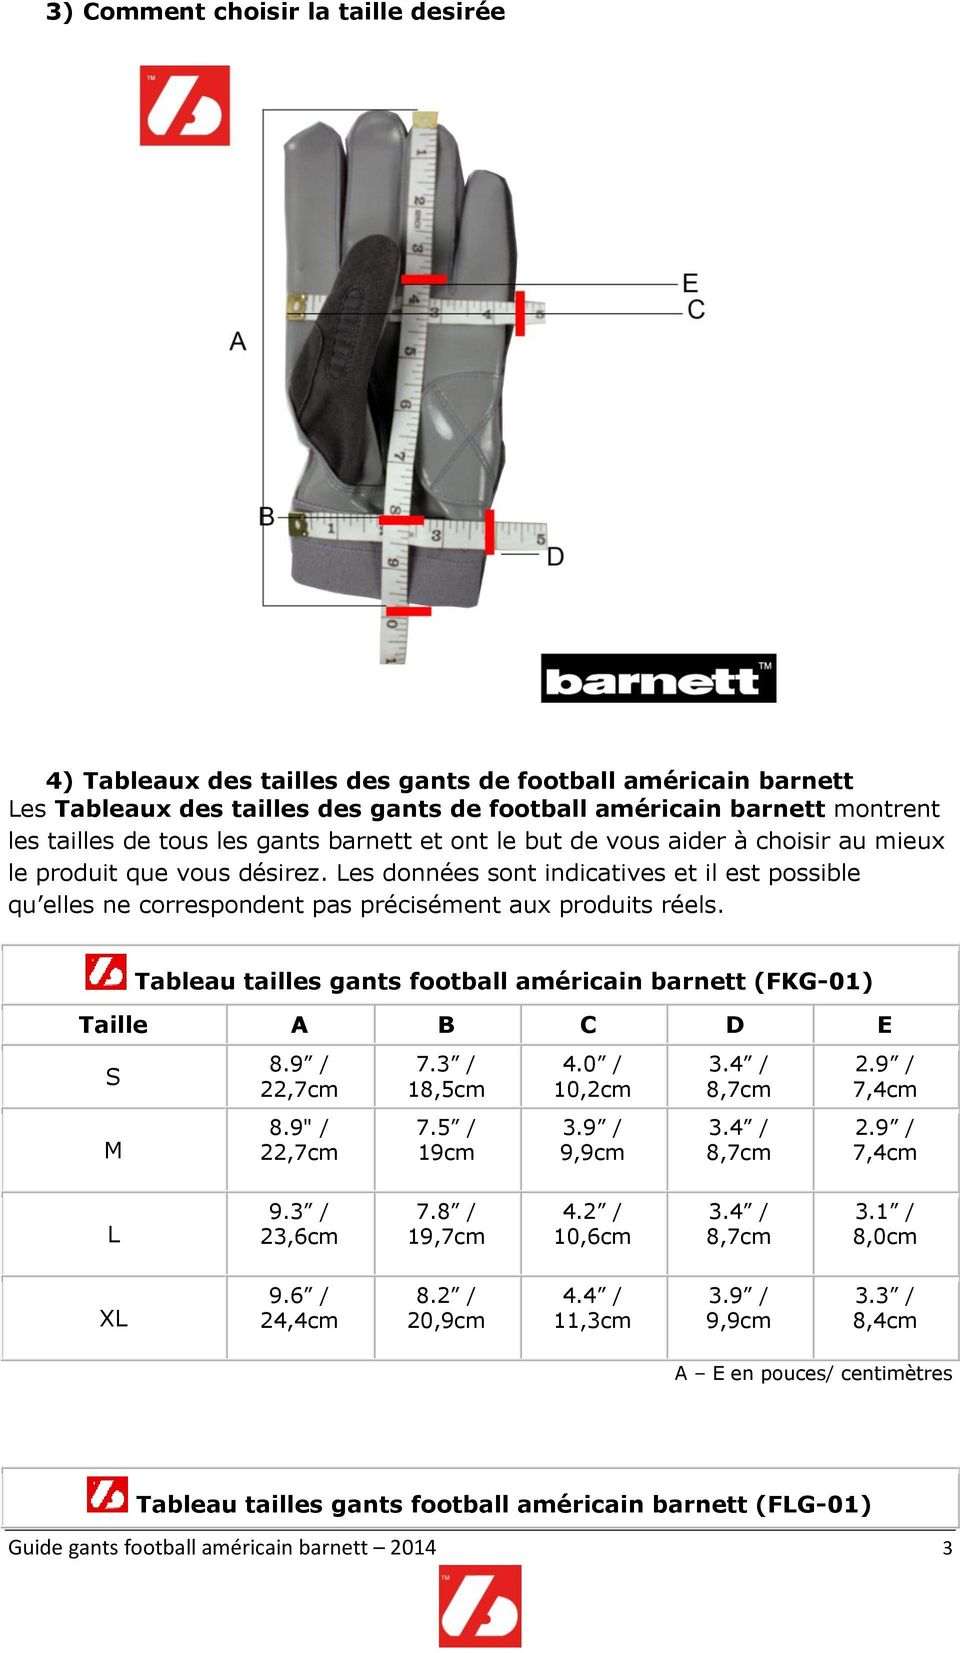 Guide des gants de football américain barnett - PDF Free Download